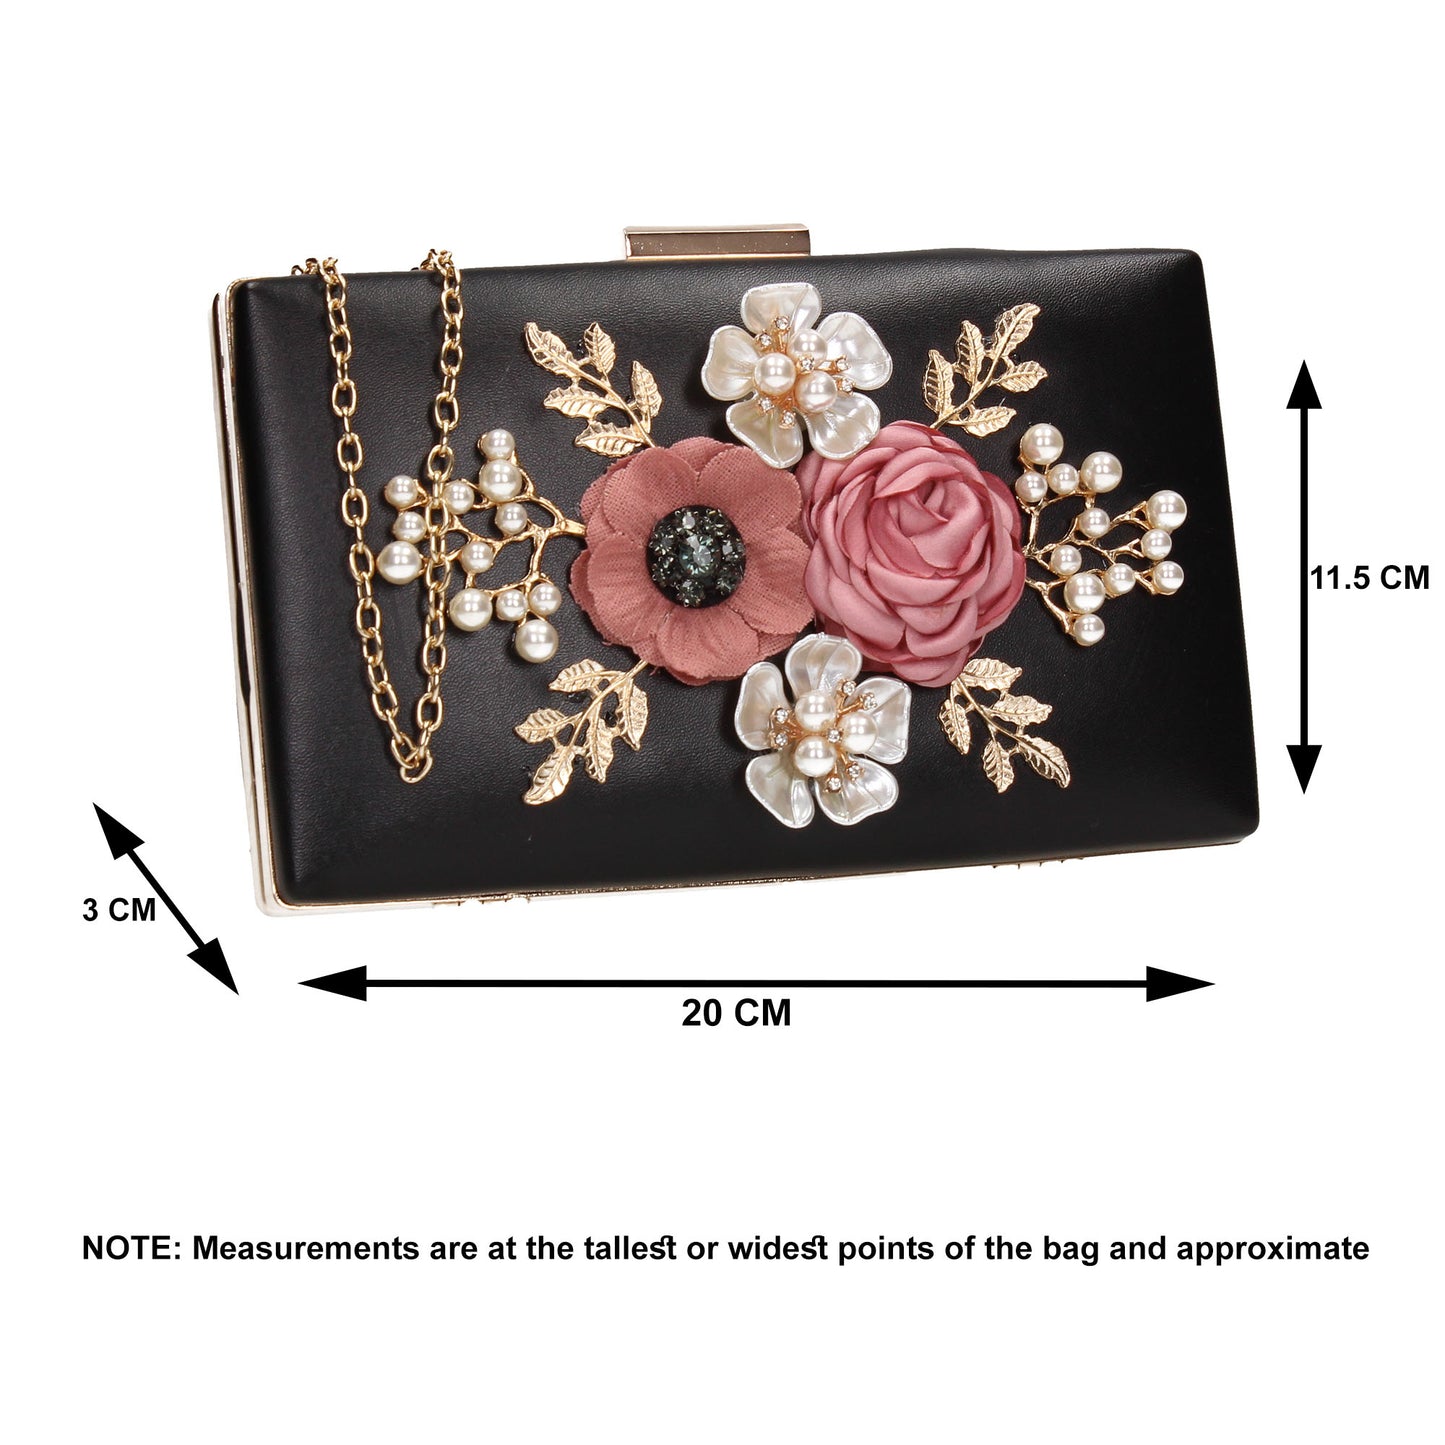 SWANKYSWANS Valery Floral Detail Clutch Bag Black Cute Cheap Clutch Bag For Weddings School and Work